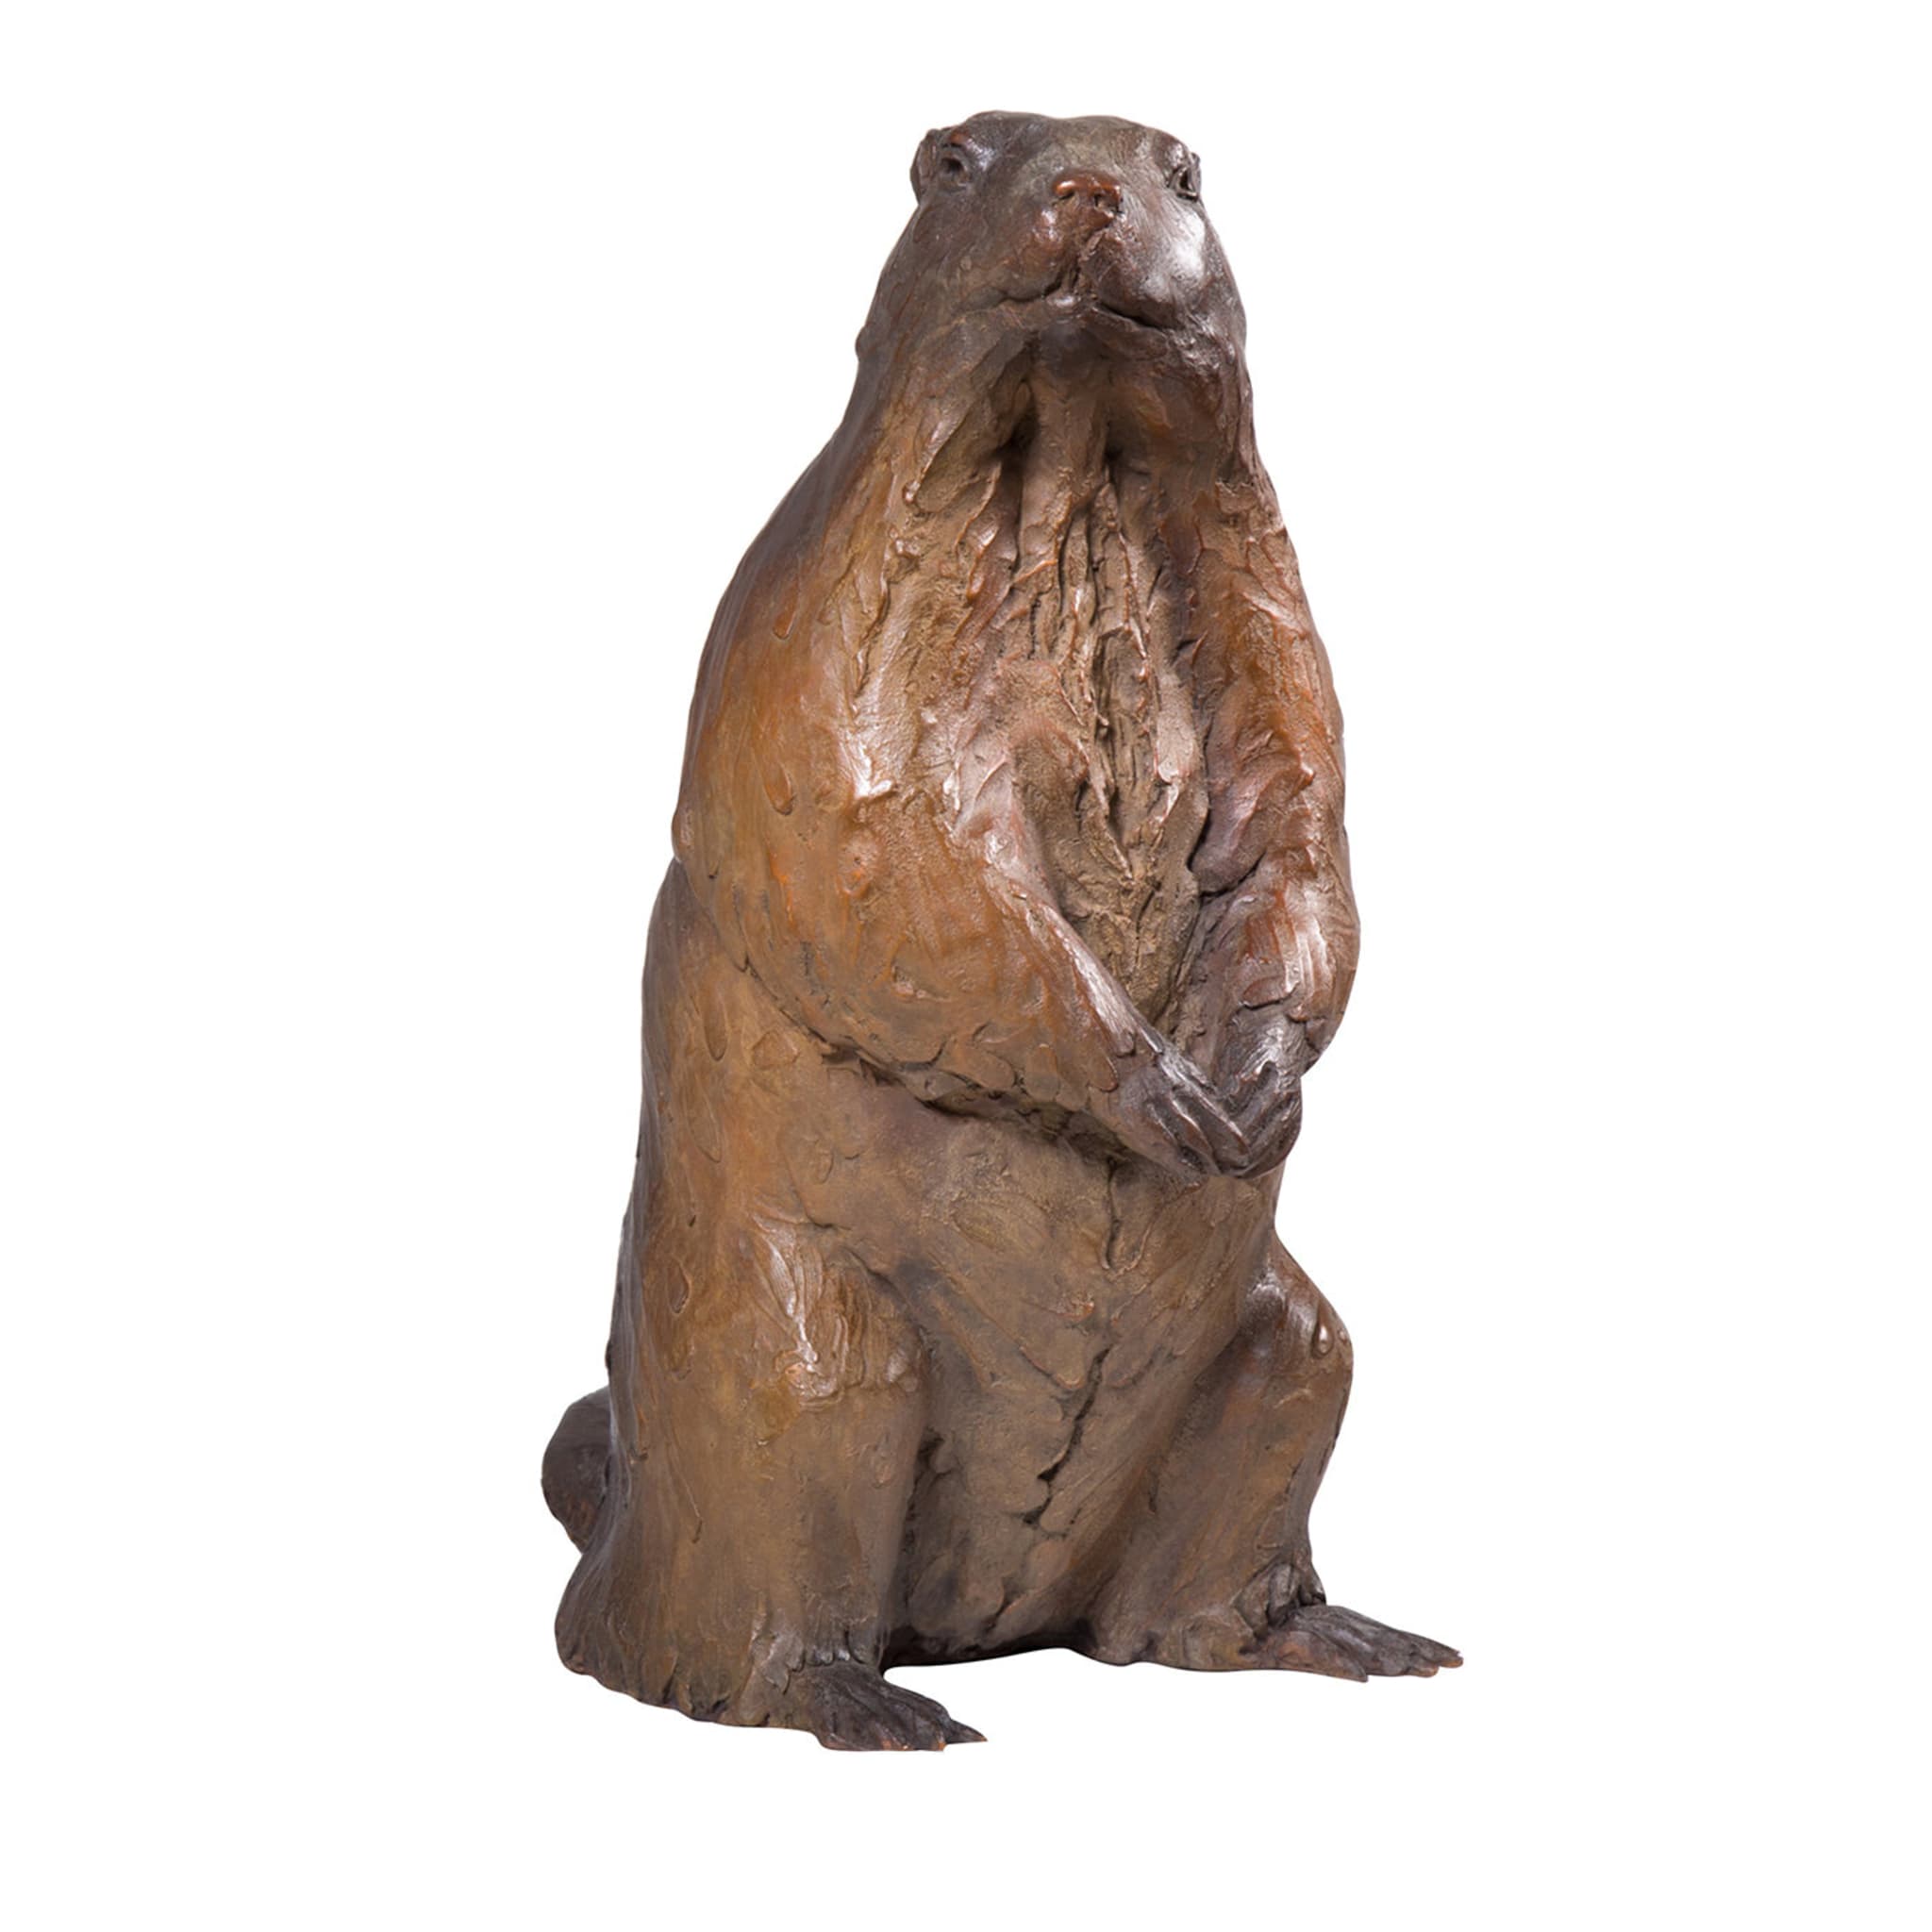 Marmot Sculpture - Main view